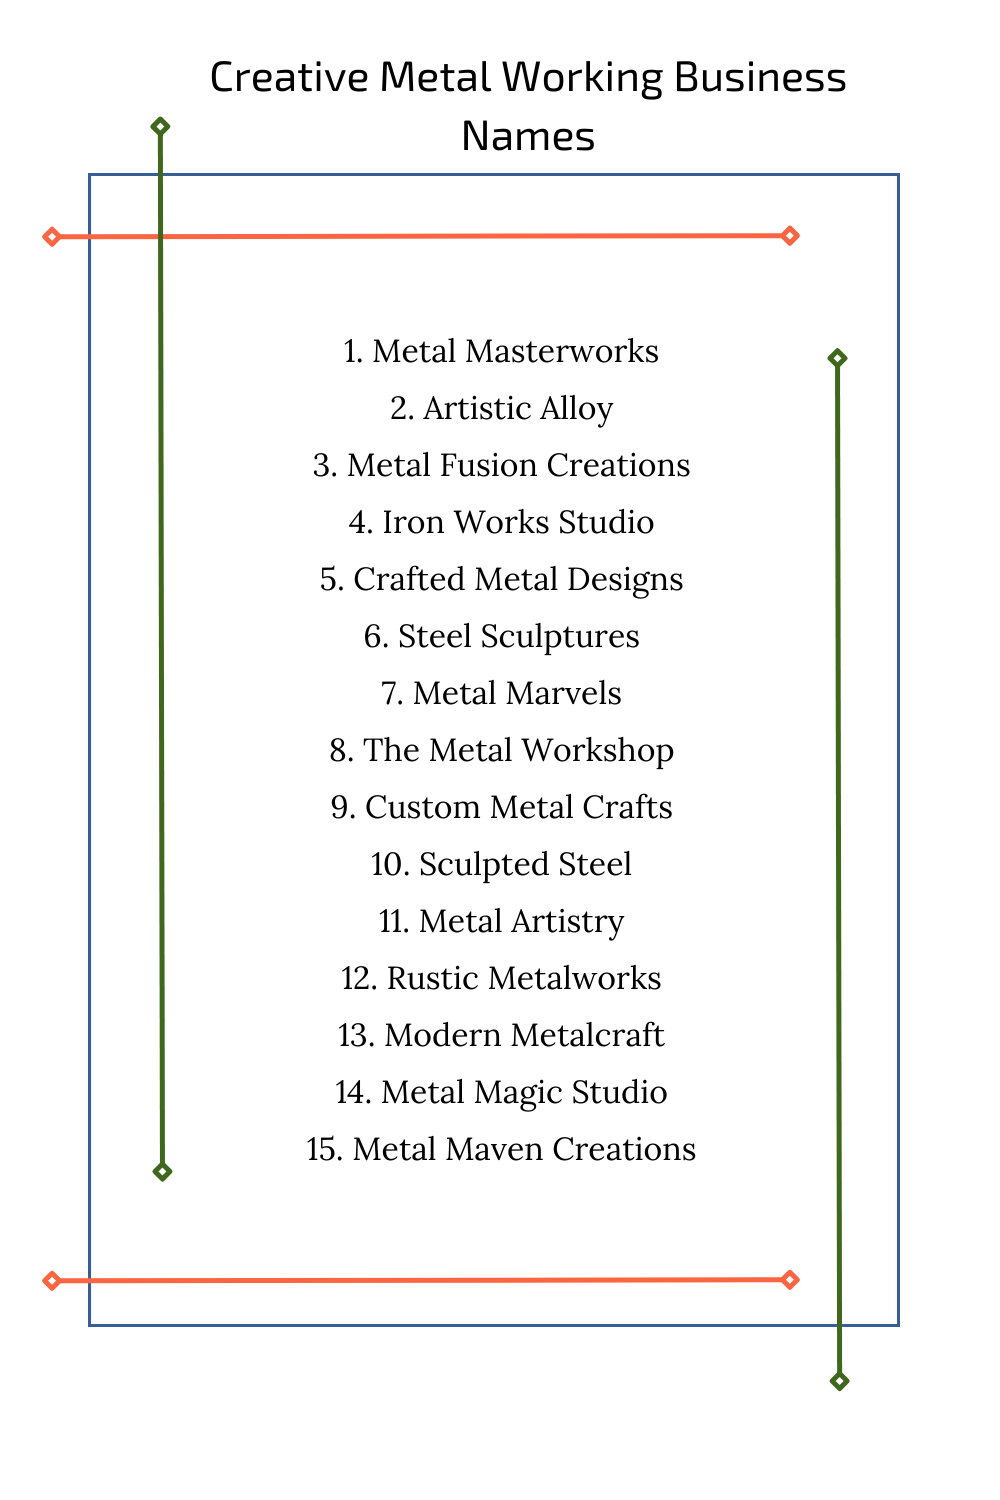 Creative Metal Working Business Names